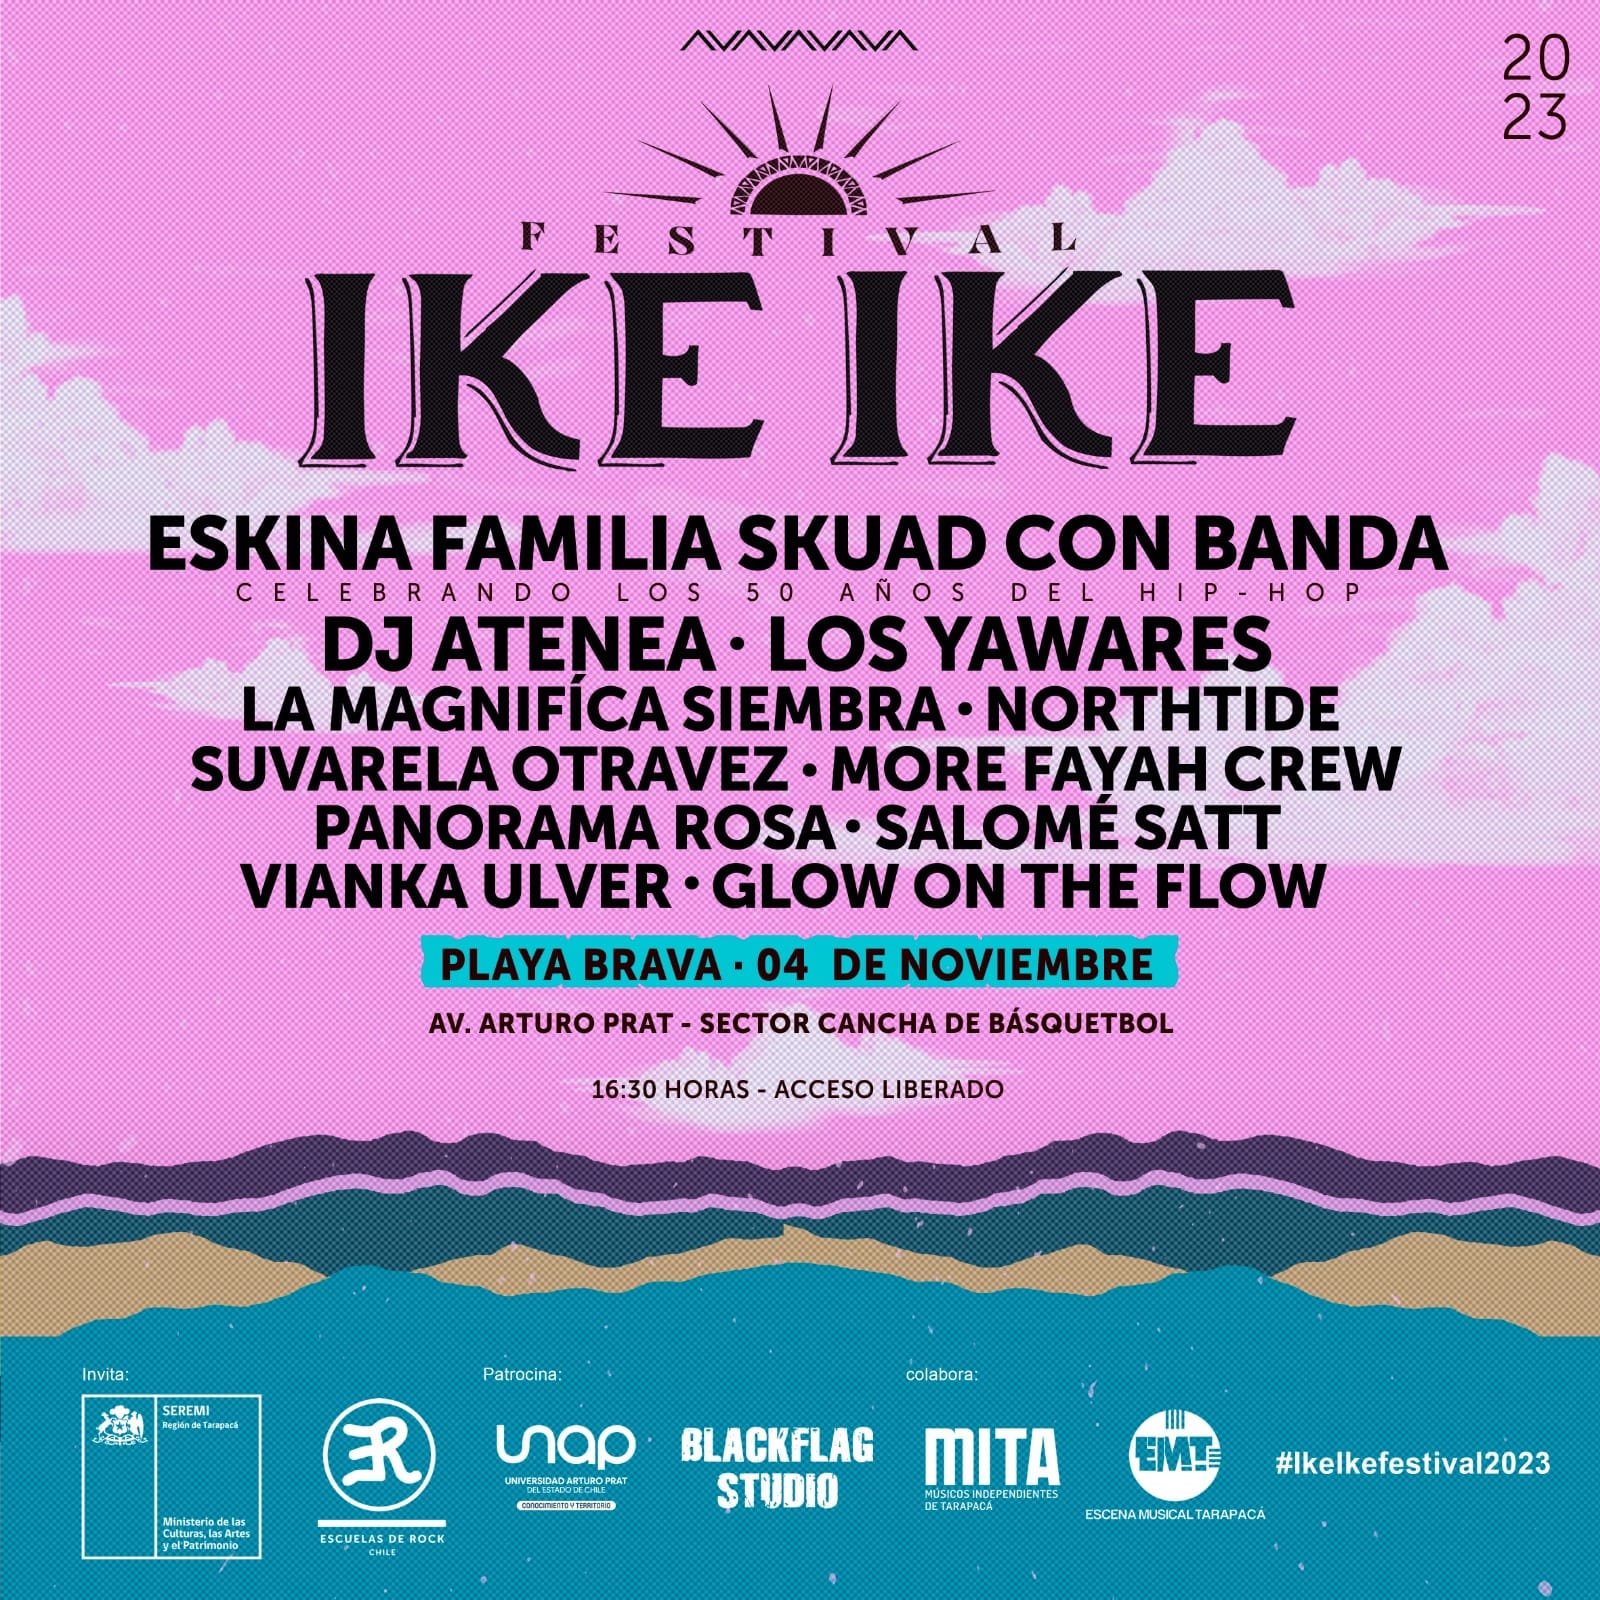 FESTIVAL IKE IKE 2023